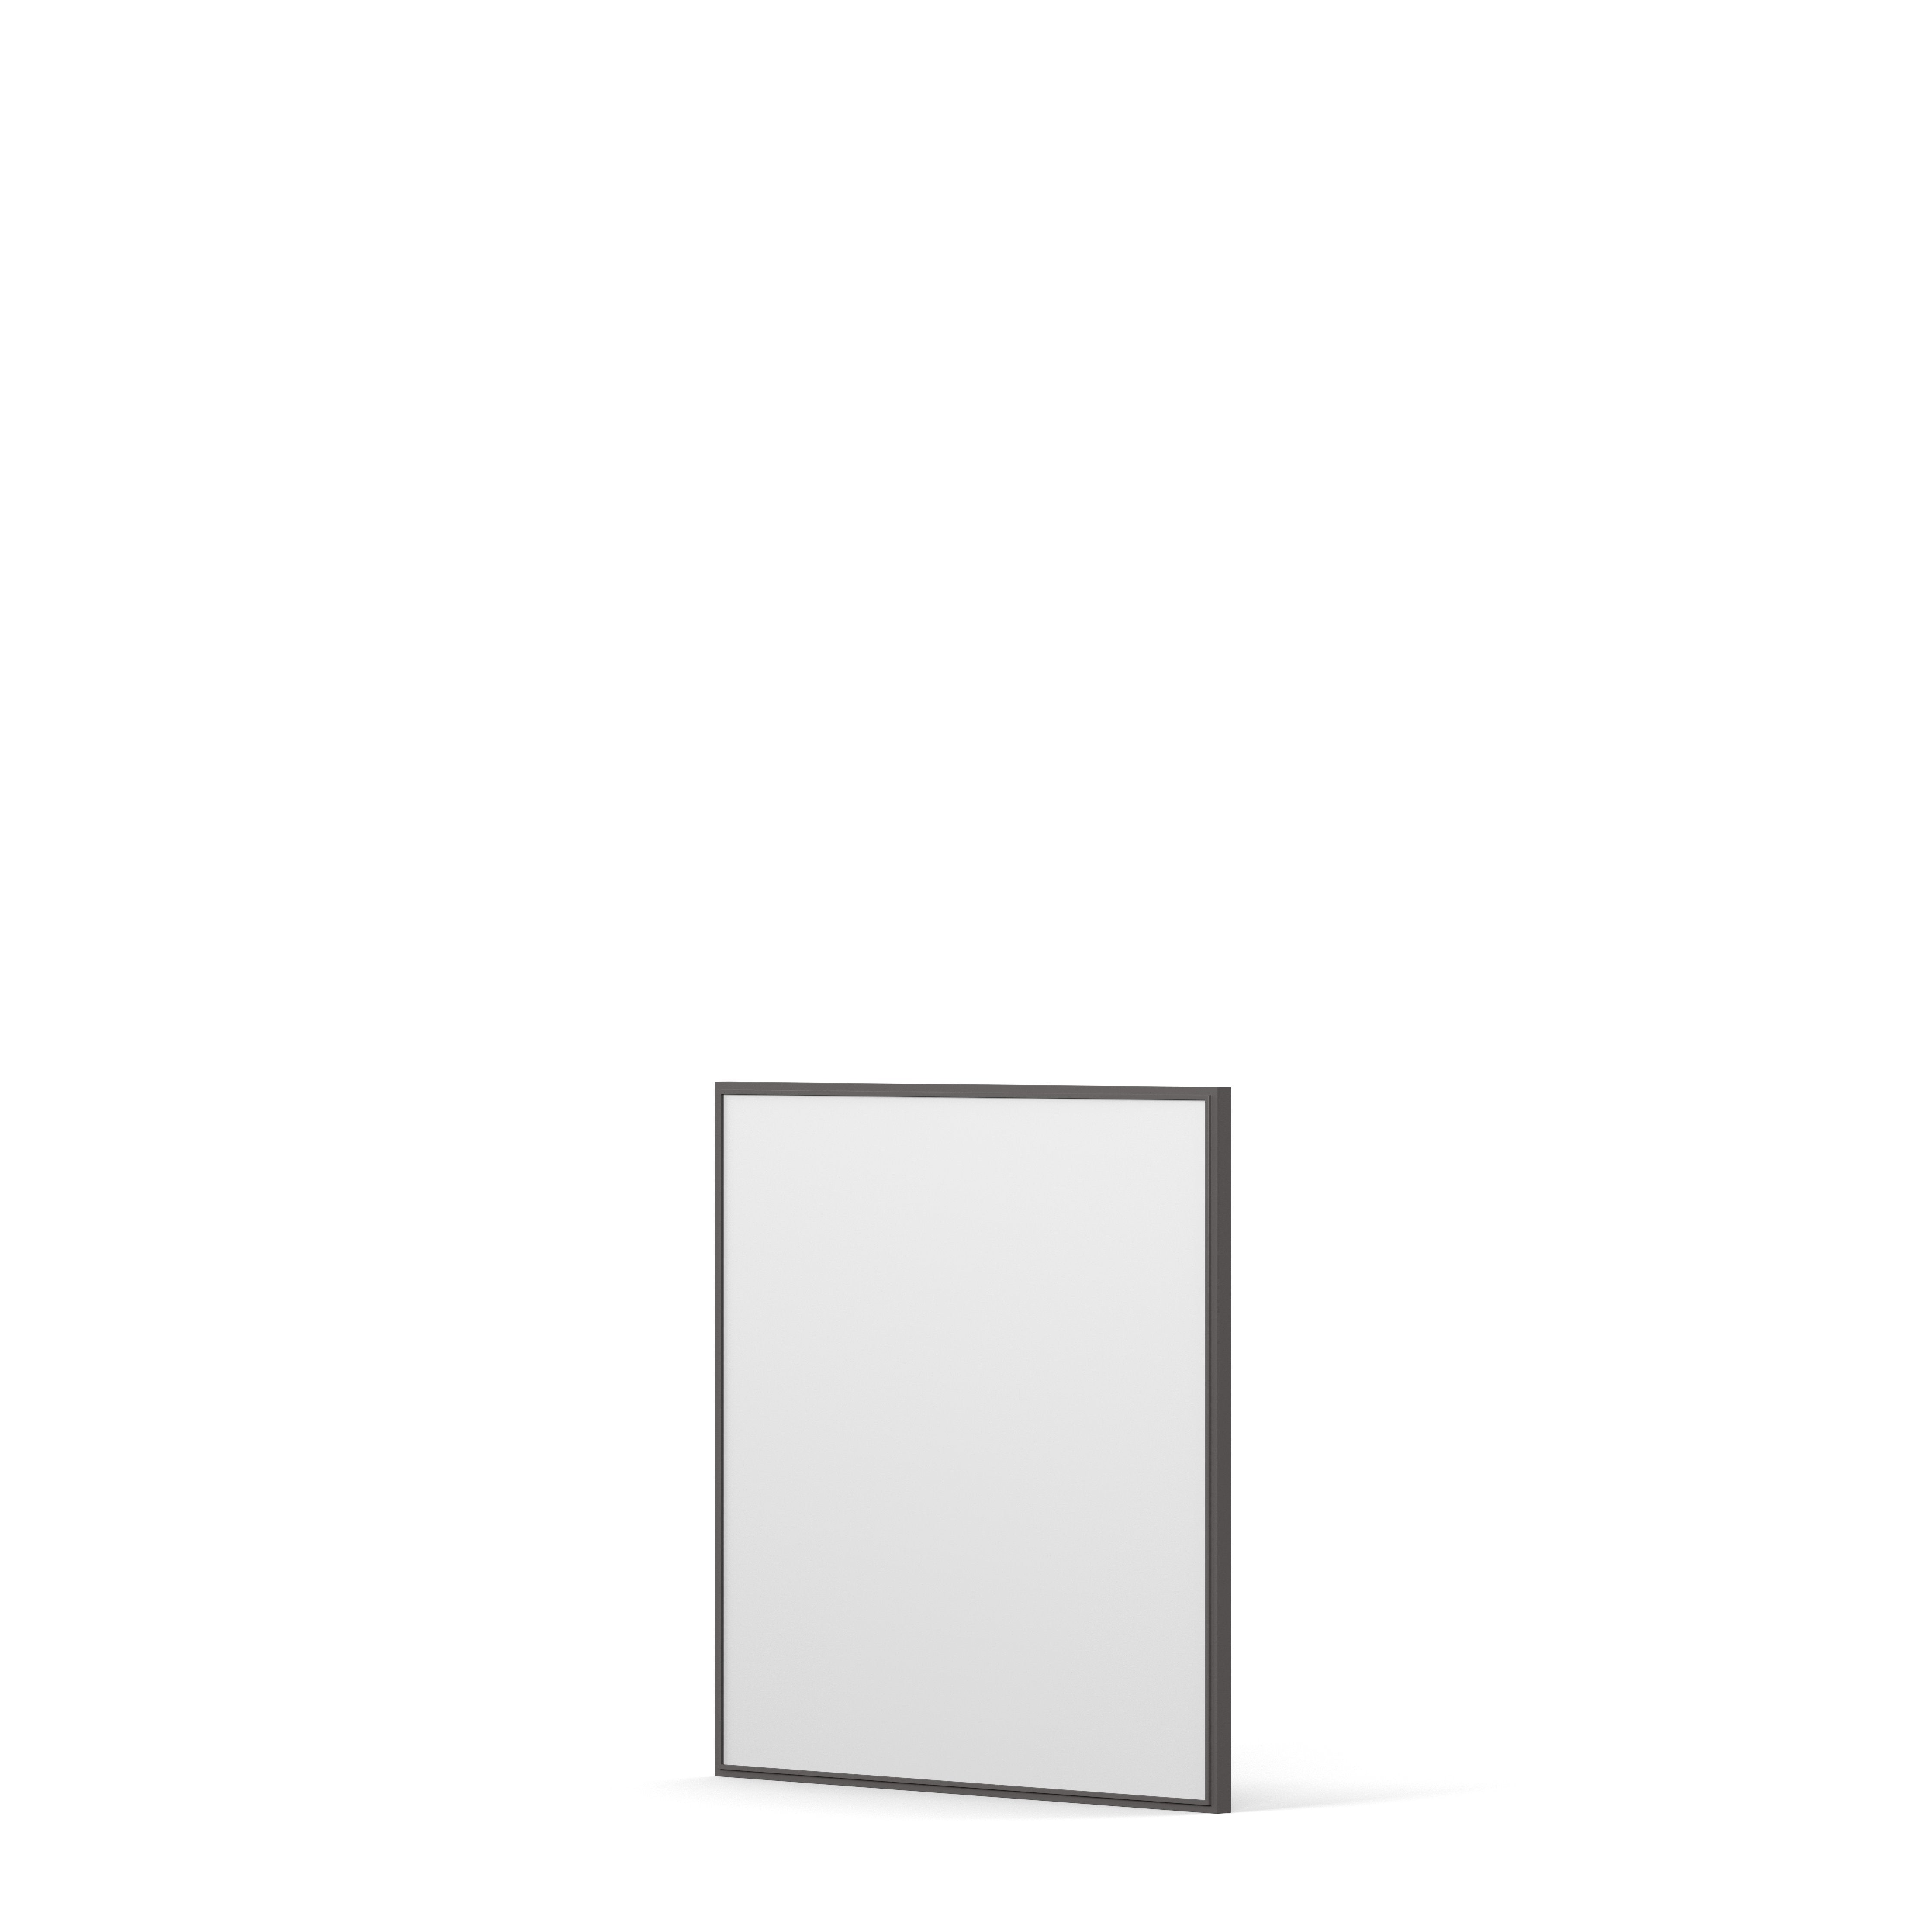 Englesson Speglar Cube Spegel Kvadratisk #färg_Edge Grey #Colour_Edge Grey